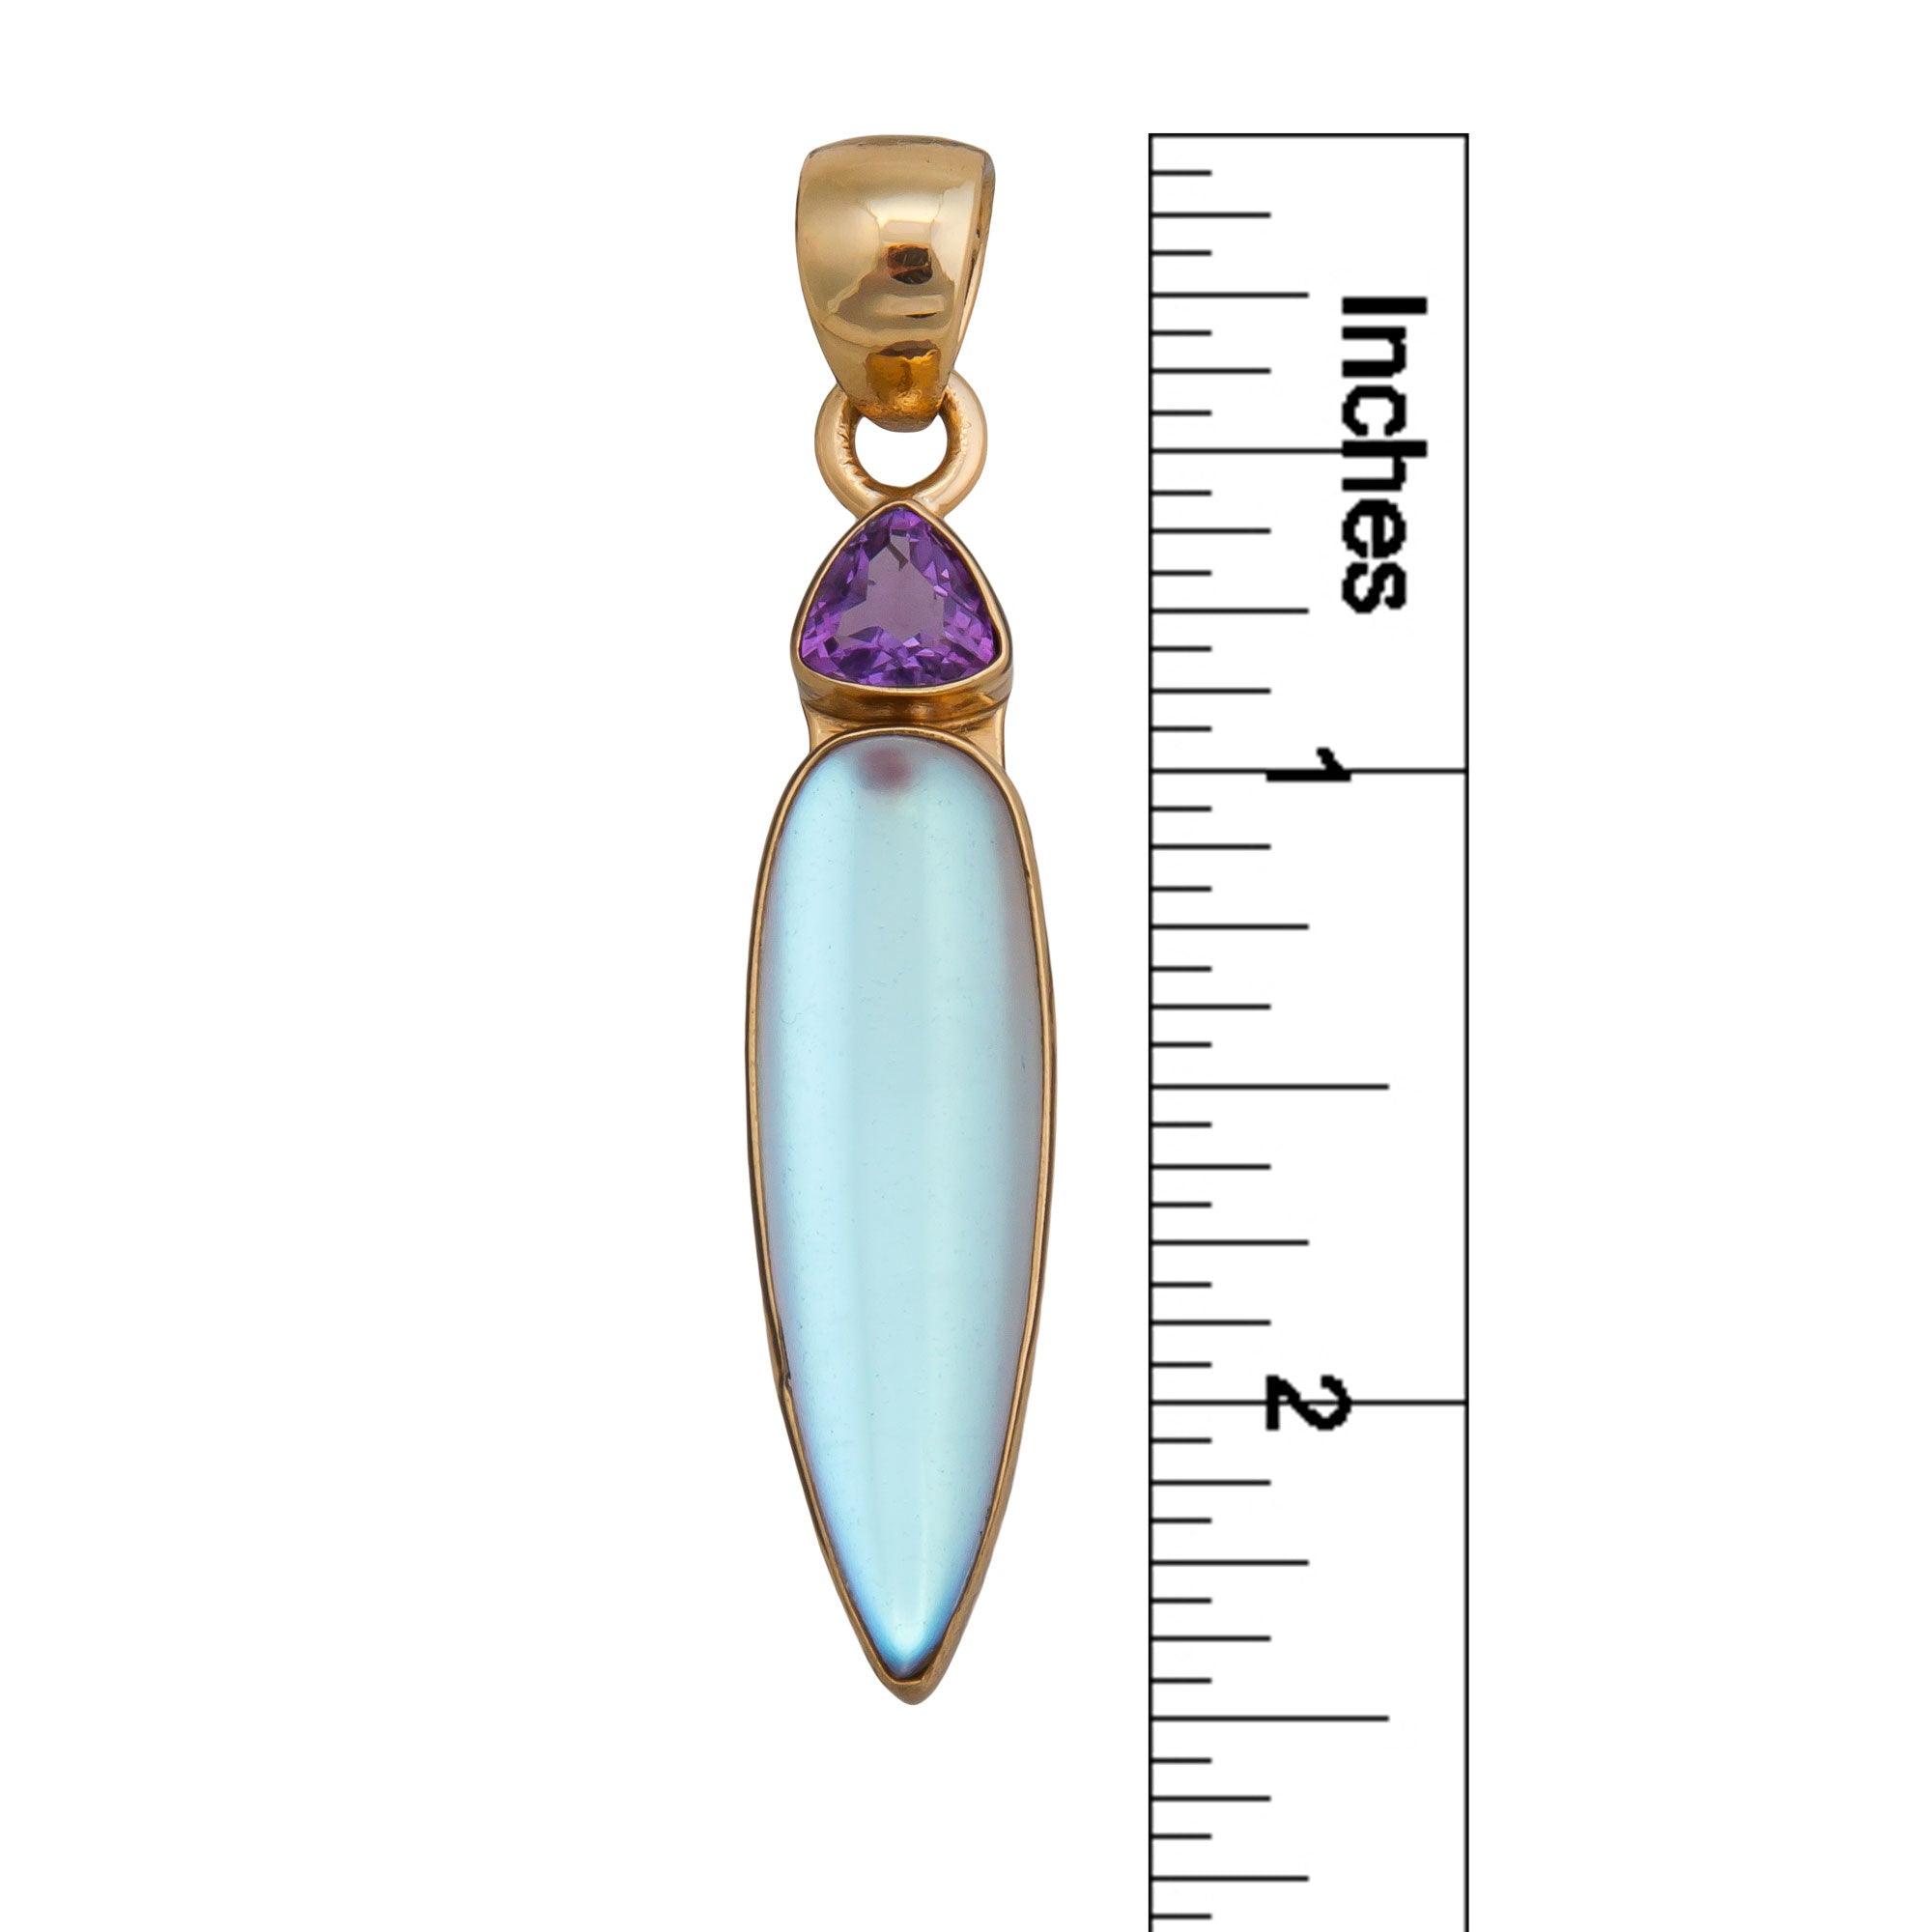 Charles Albert Jewelry - Alchemia Amethyst and Luminite Pendant - Measurements